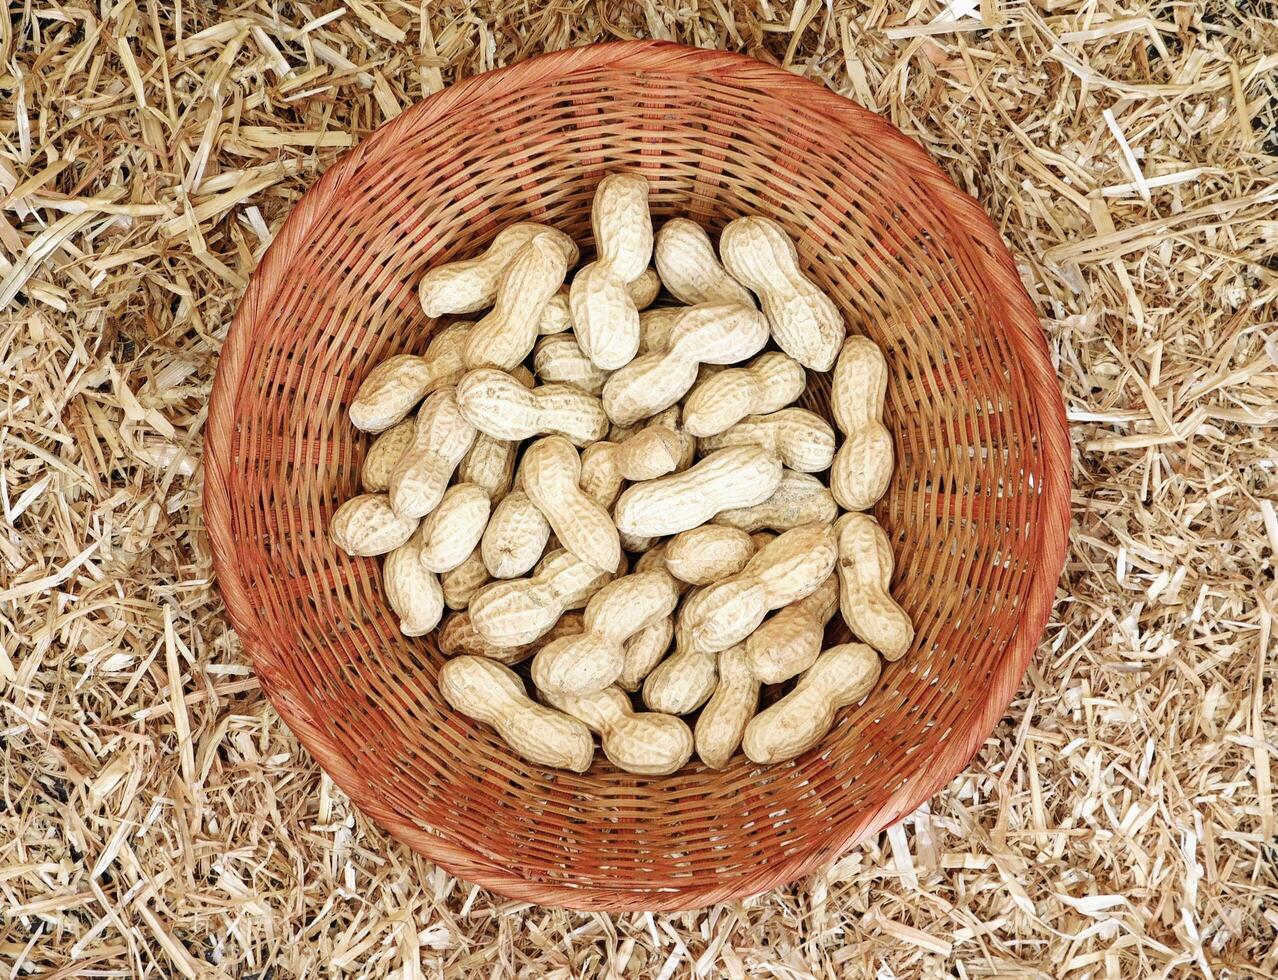 Peanuts in the garden photo